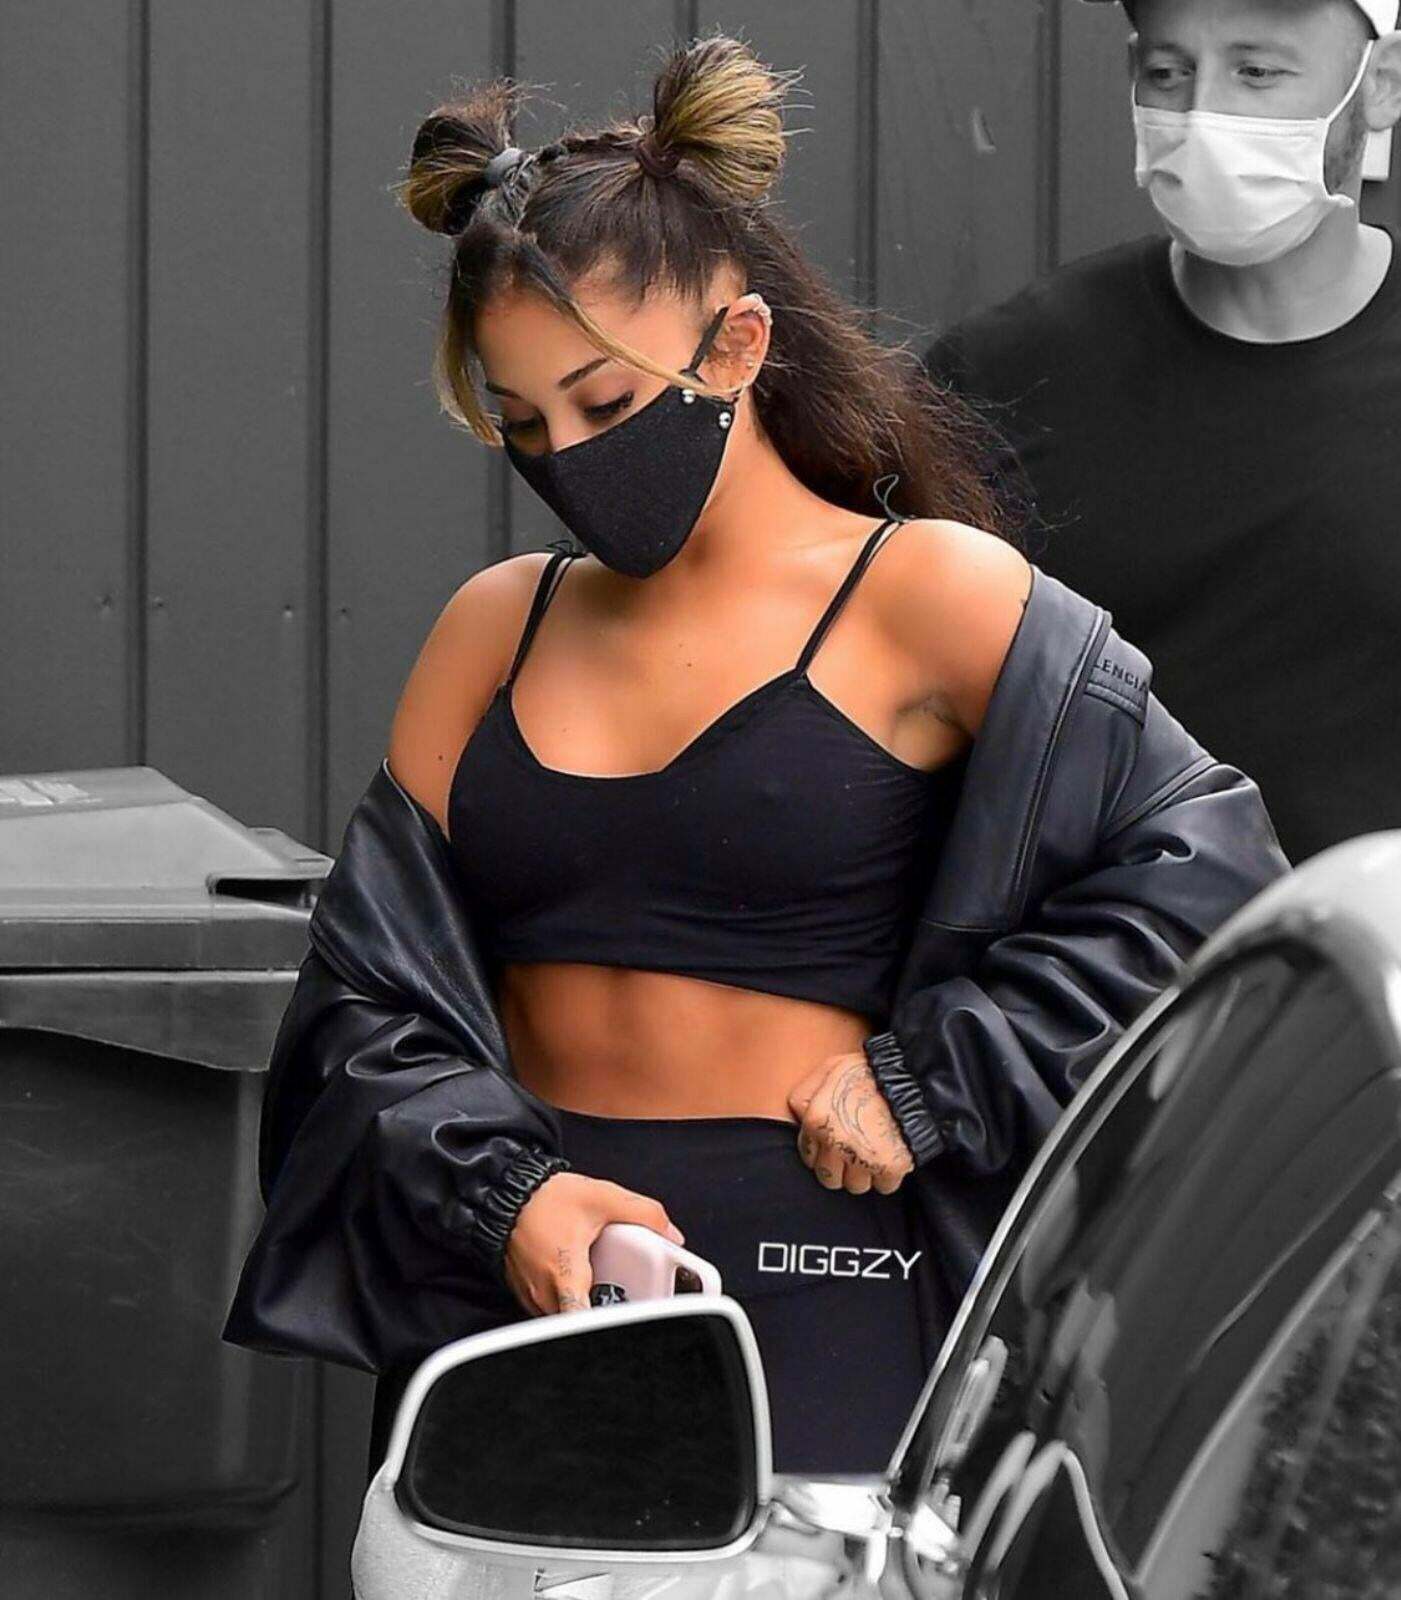 Ariana Grande strolling around braless in LA today